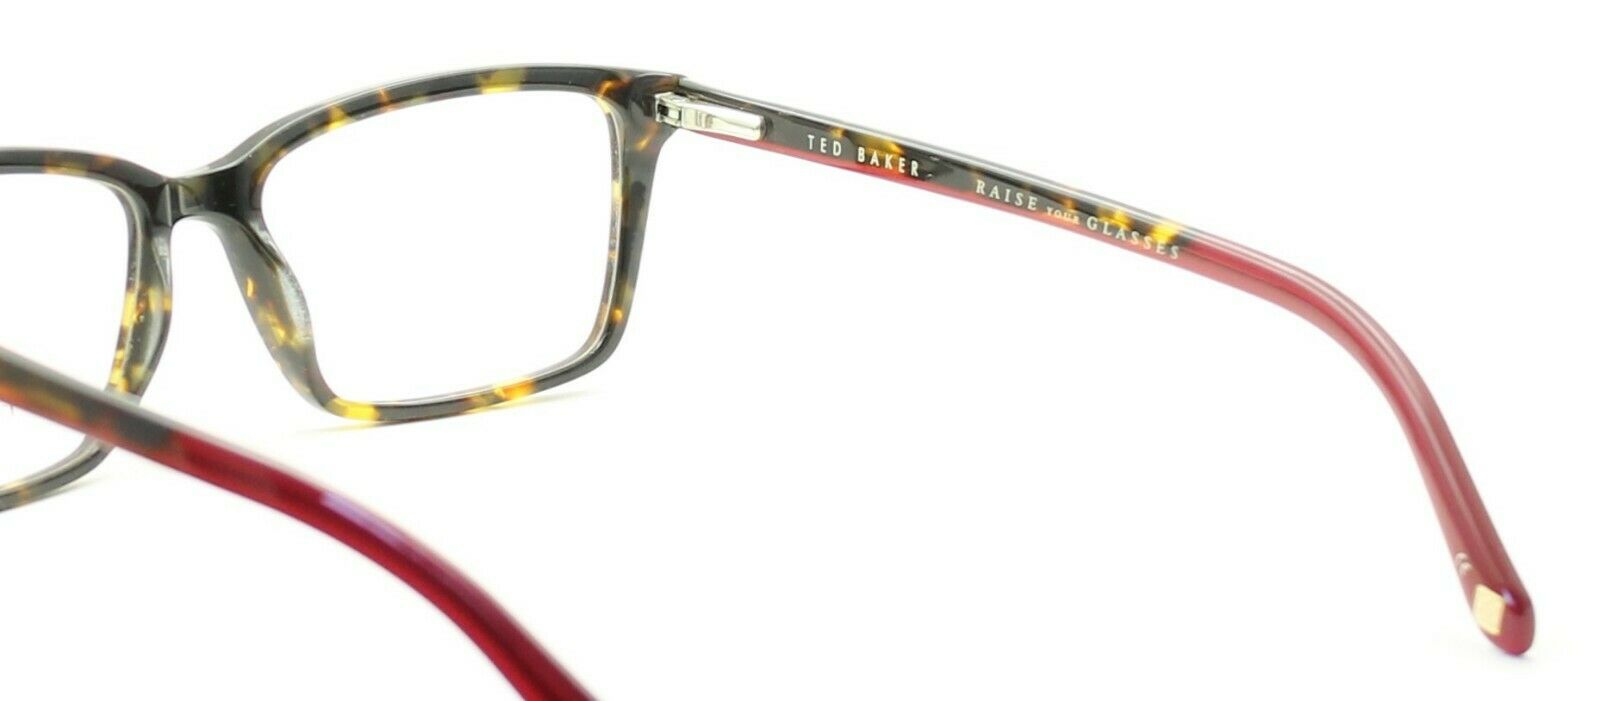 TED BAKER Hooper 8159 145 54mm Eyewear FRAMES Glasses Eyeglasses RX Optical -New